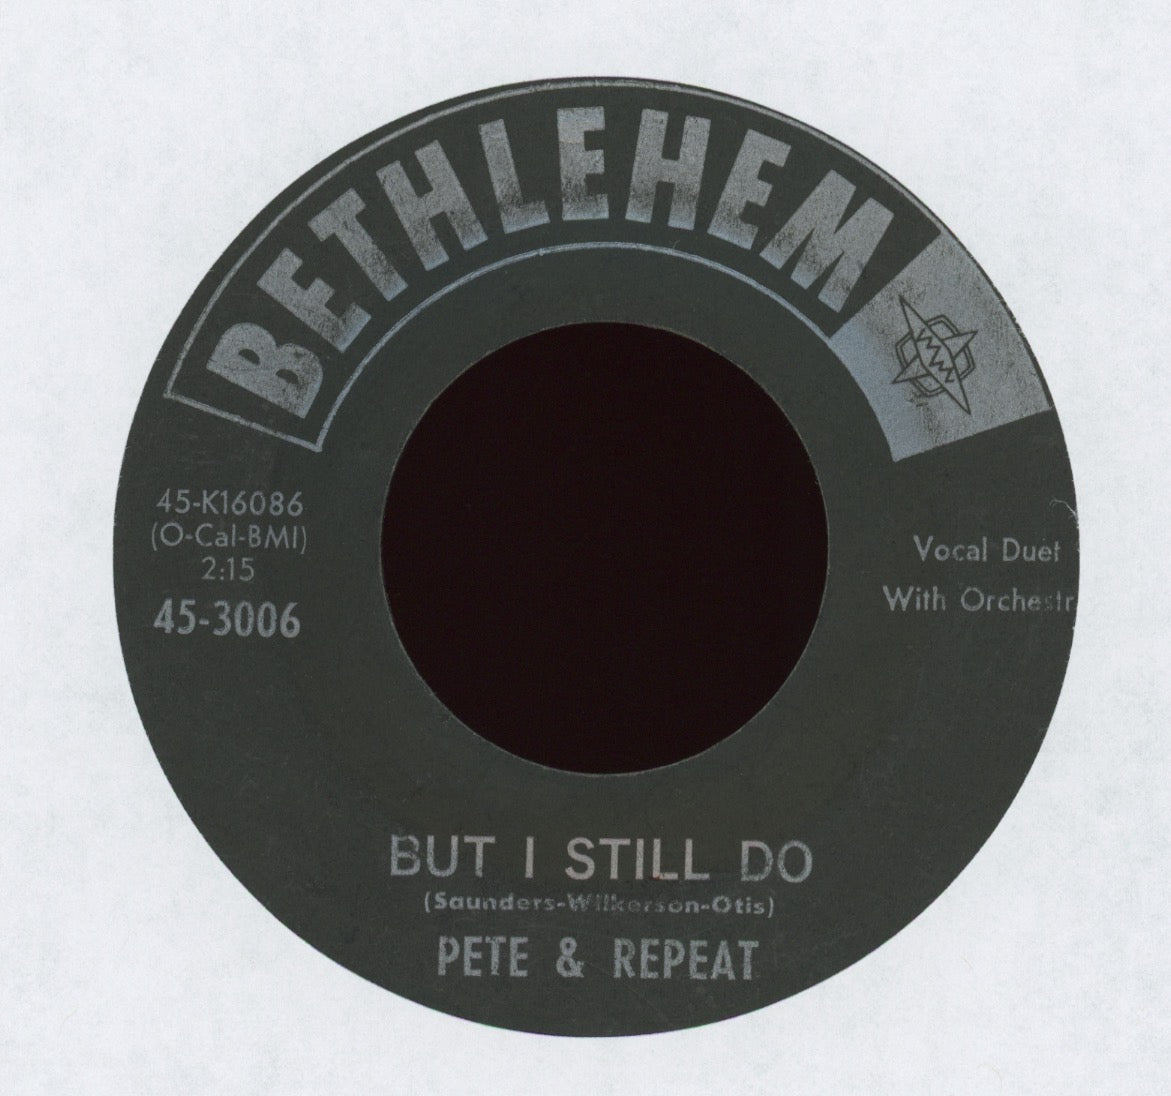 Pete & Repeat - But I Still Do on Bethlehem R&B 45